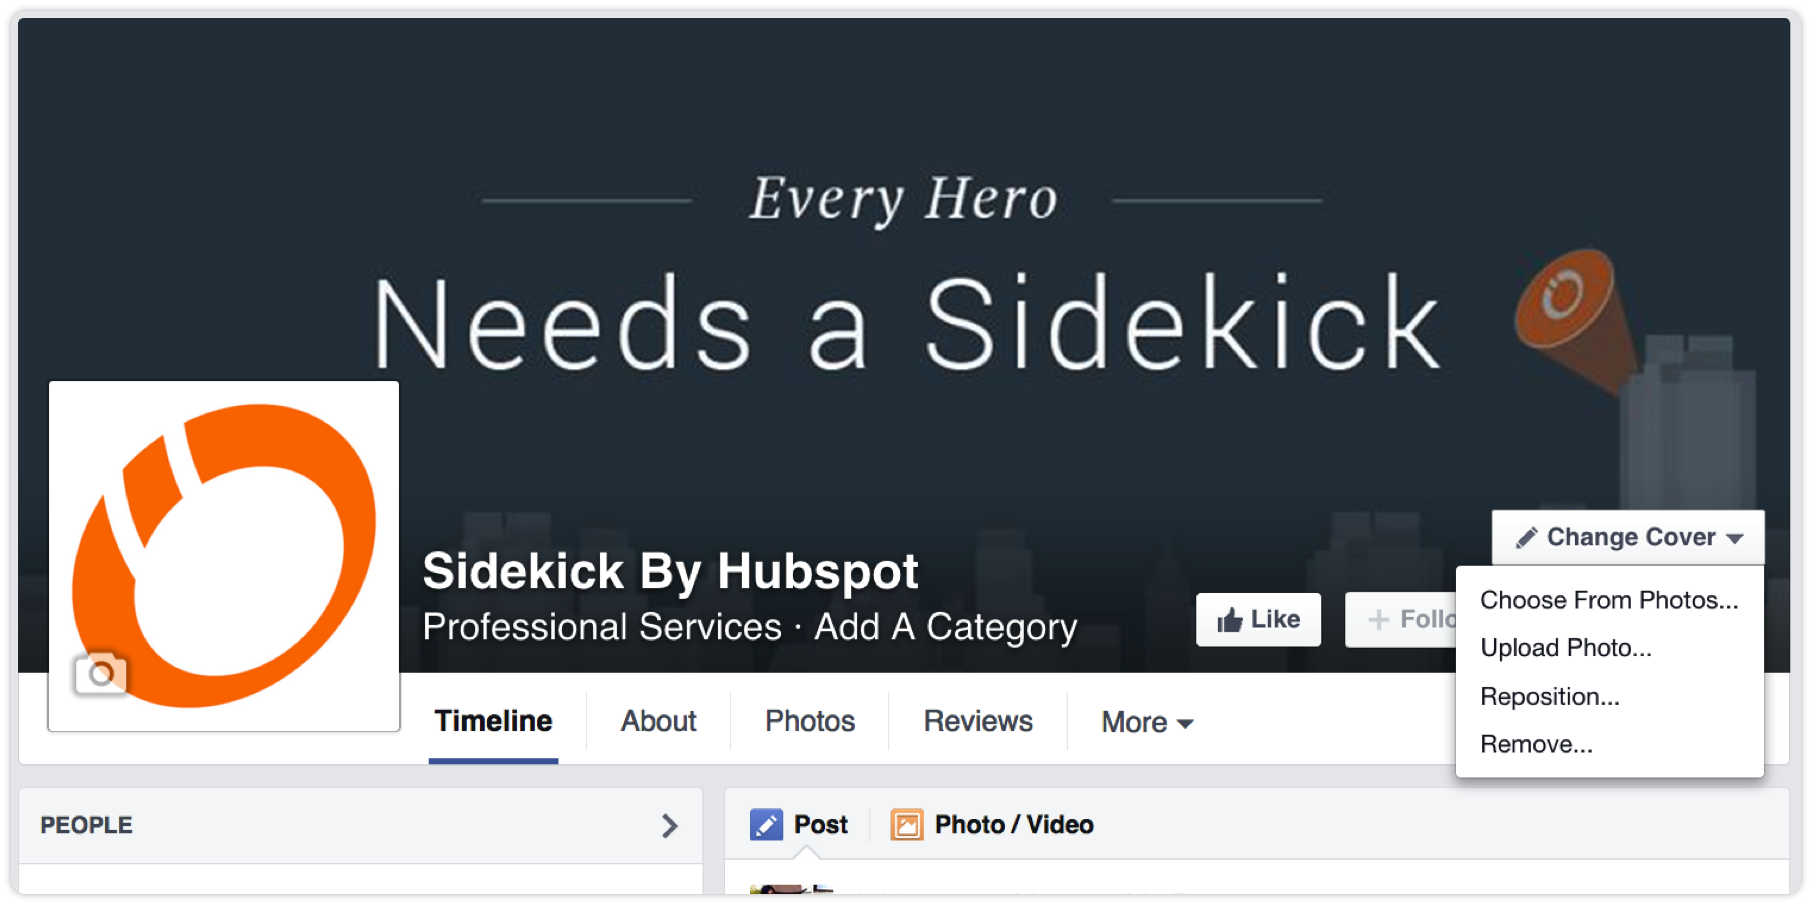 every-hero-needs-sidekick-by-hubspot-facebook-cover-photo